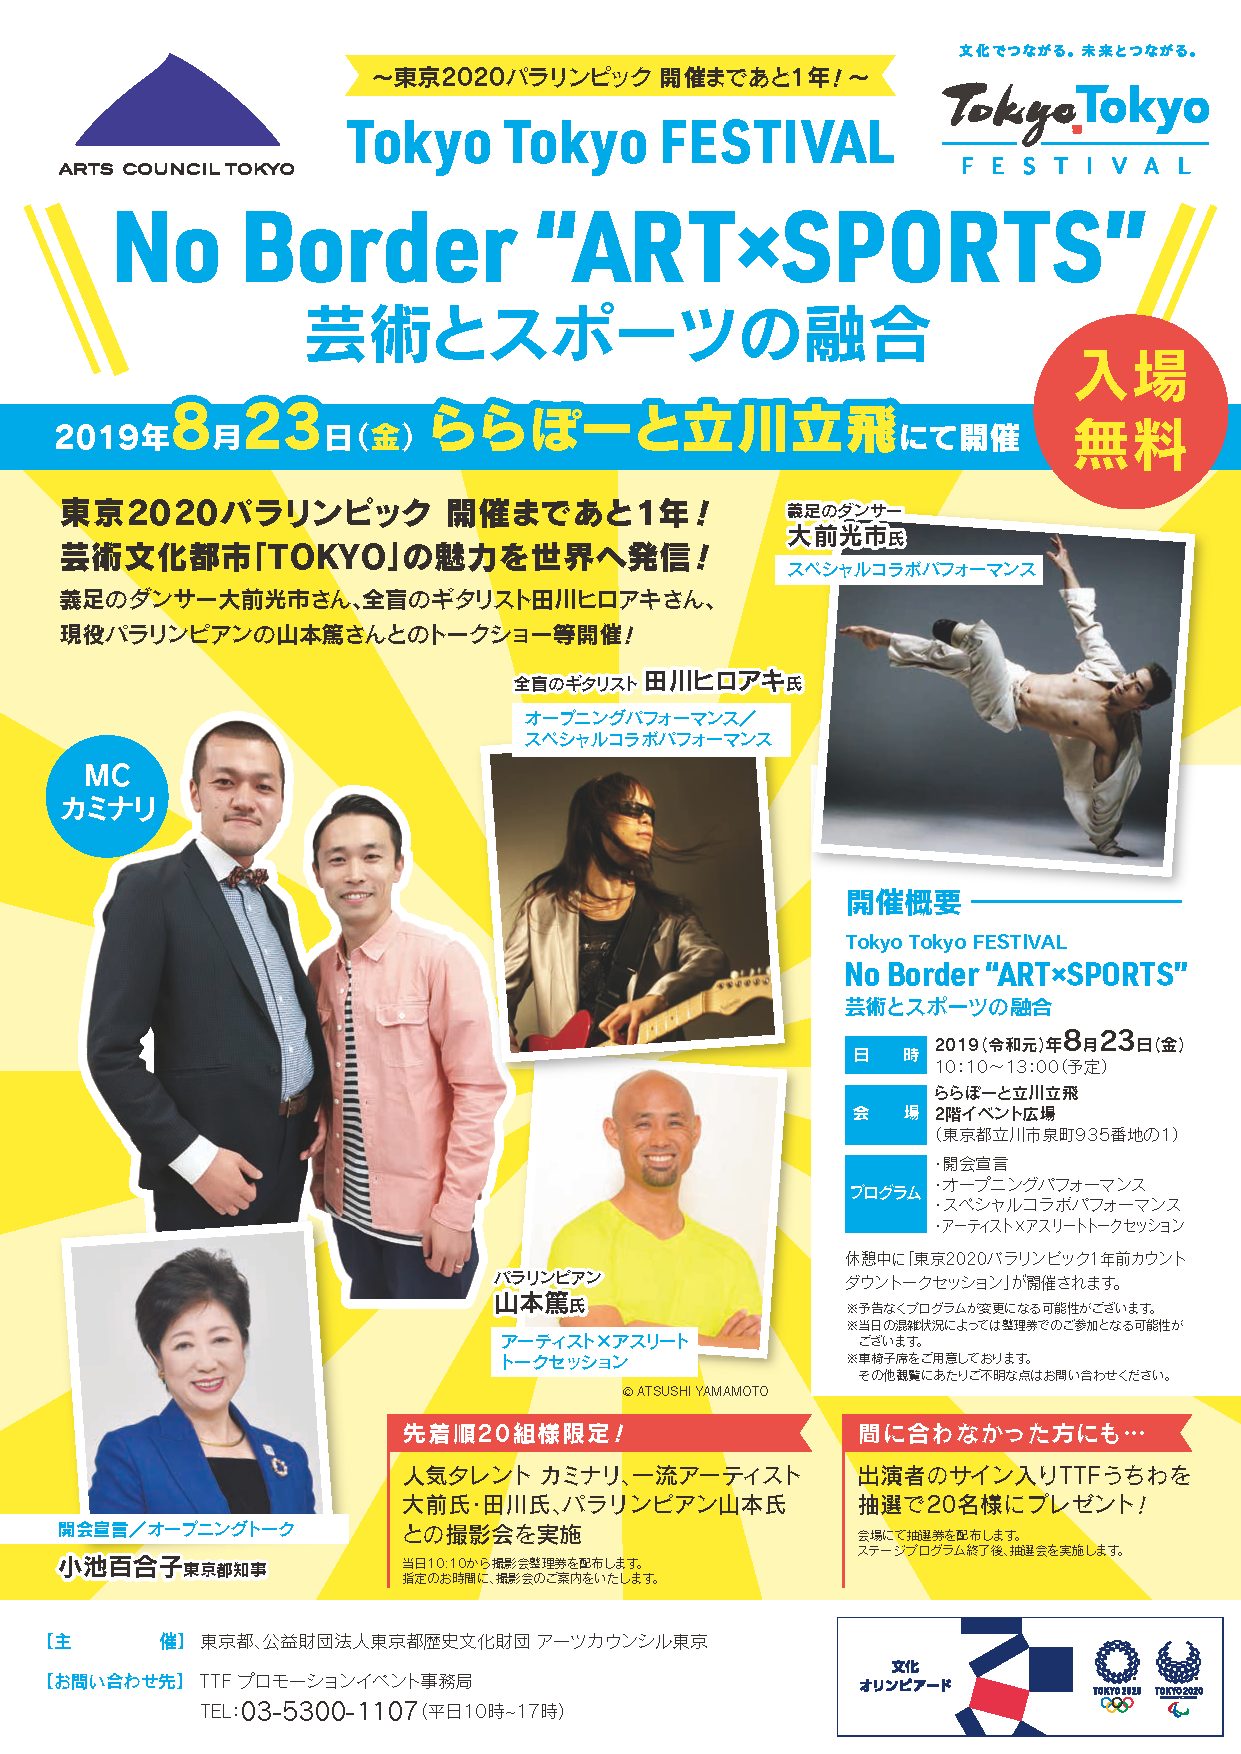 Tokyo Tokyo Festival プロモーションイベント No Border Art Sports 芸術とスポーツの融合 イベント情報 公益財団法人東京都歴史文化財団